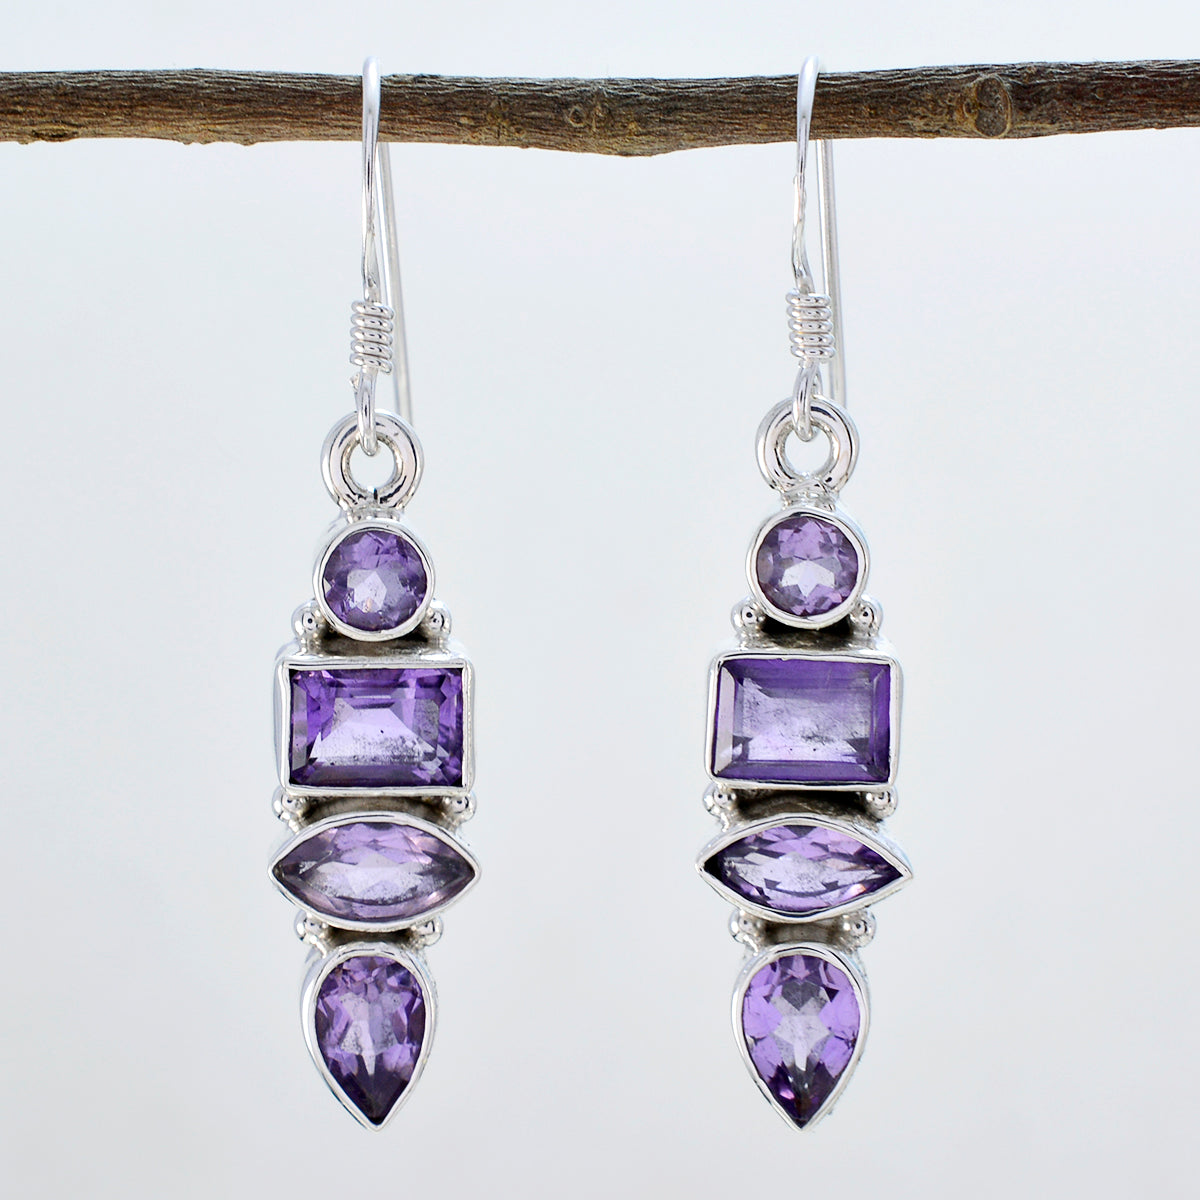 Riyo Nice Gemstone multi shape Faceted Purple Amethyst Silver Earrings frinendship day gift